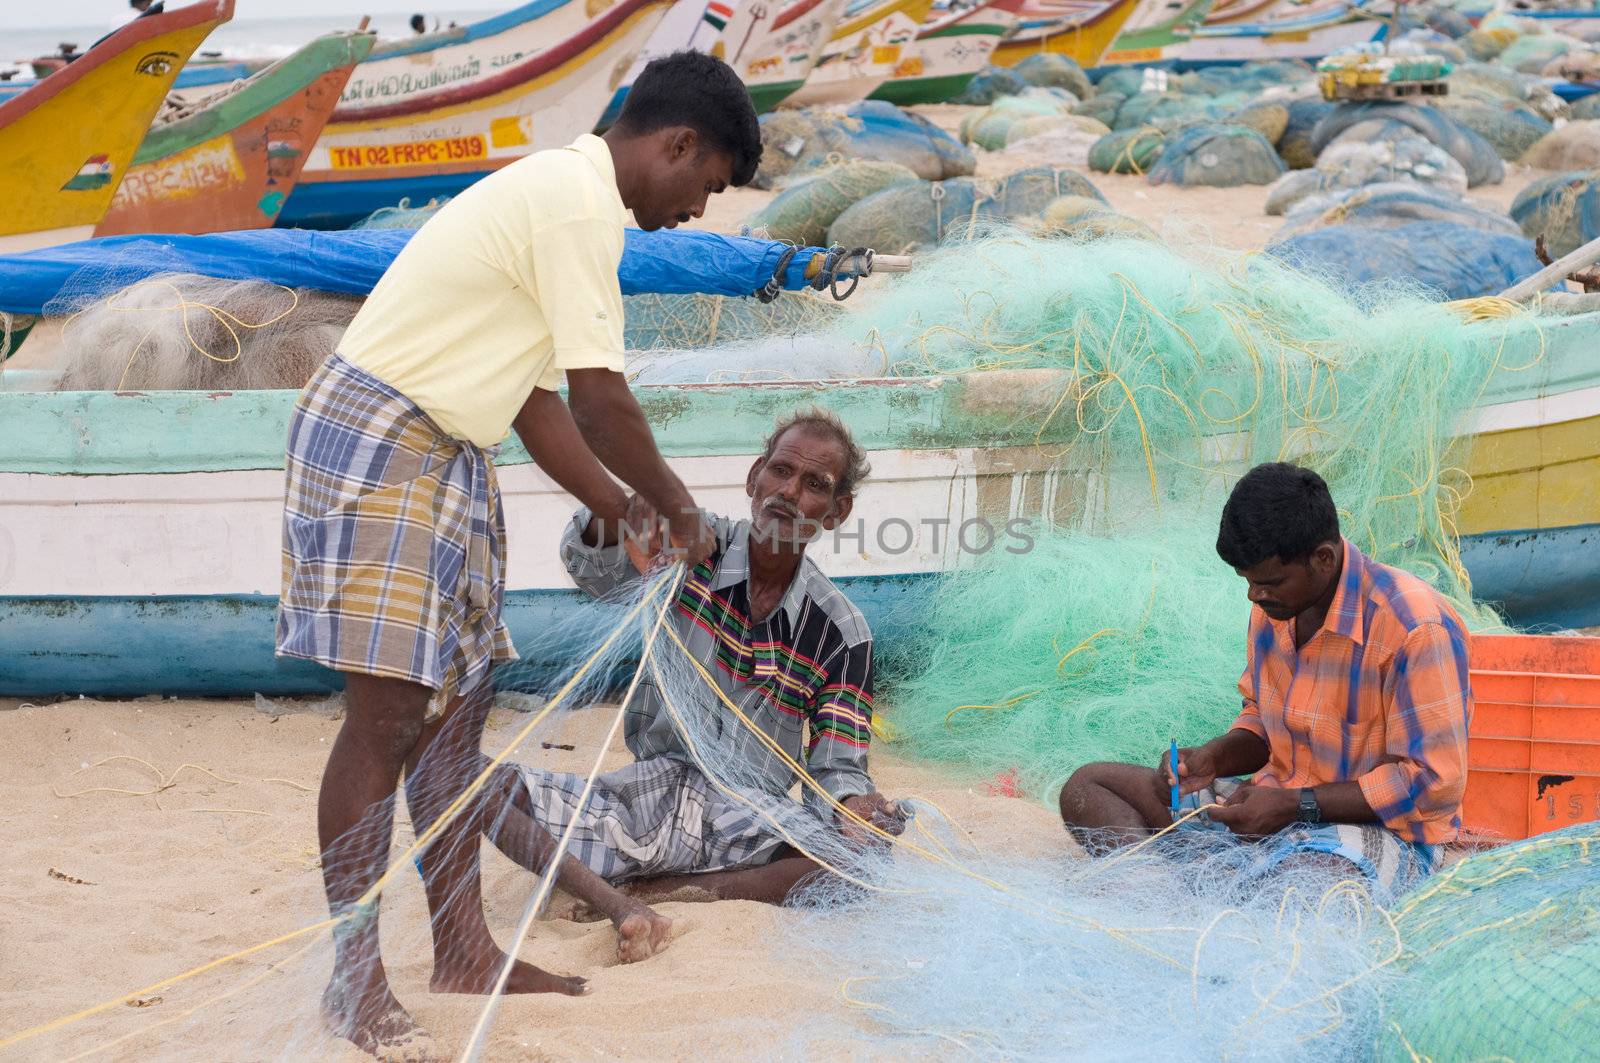 Fisherman weaving nets in the Indian coastline